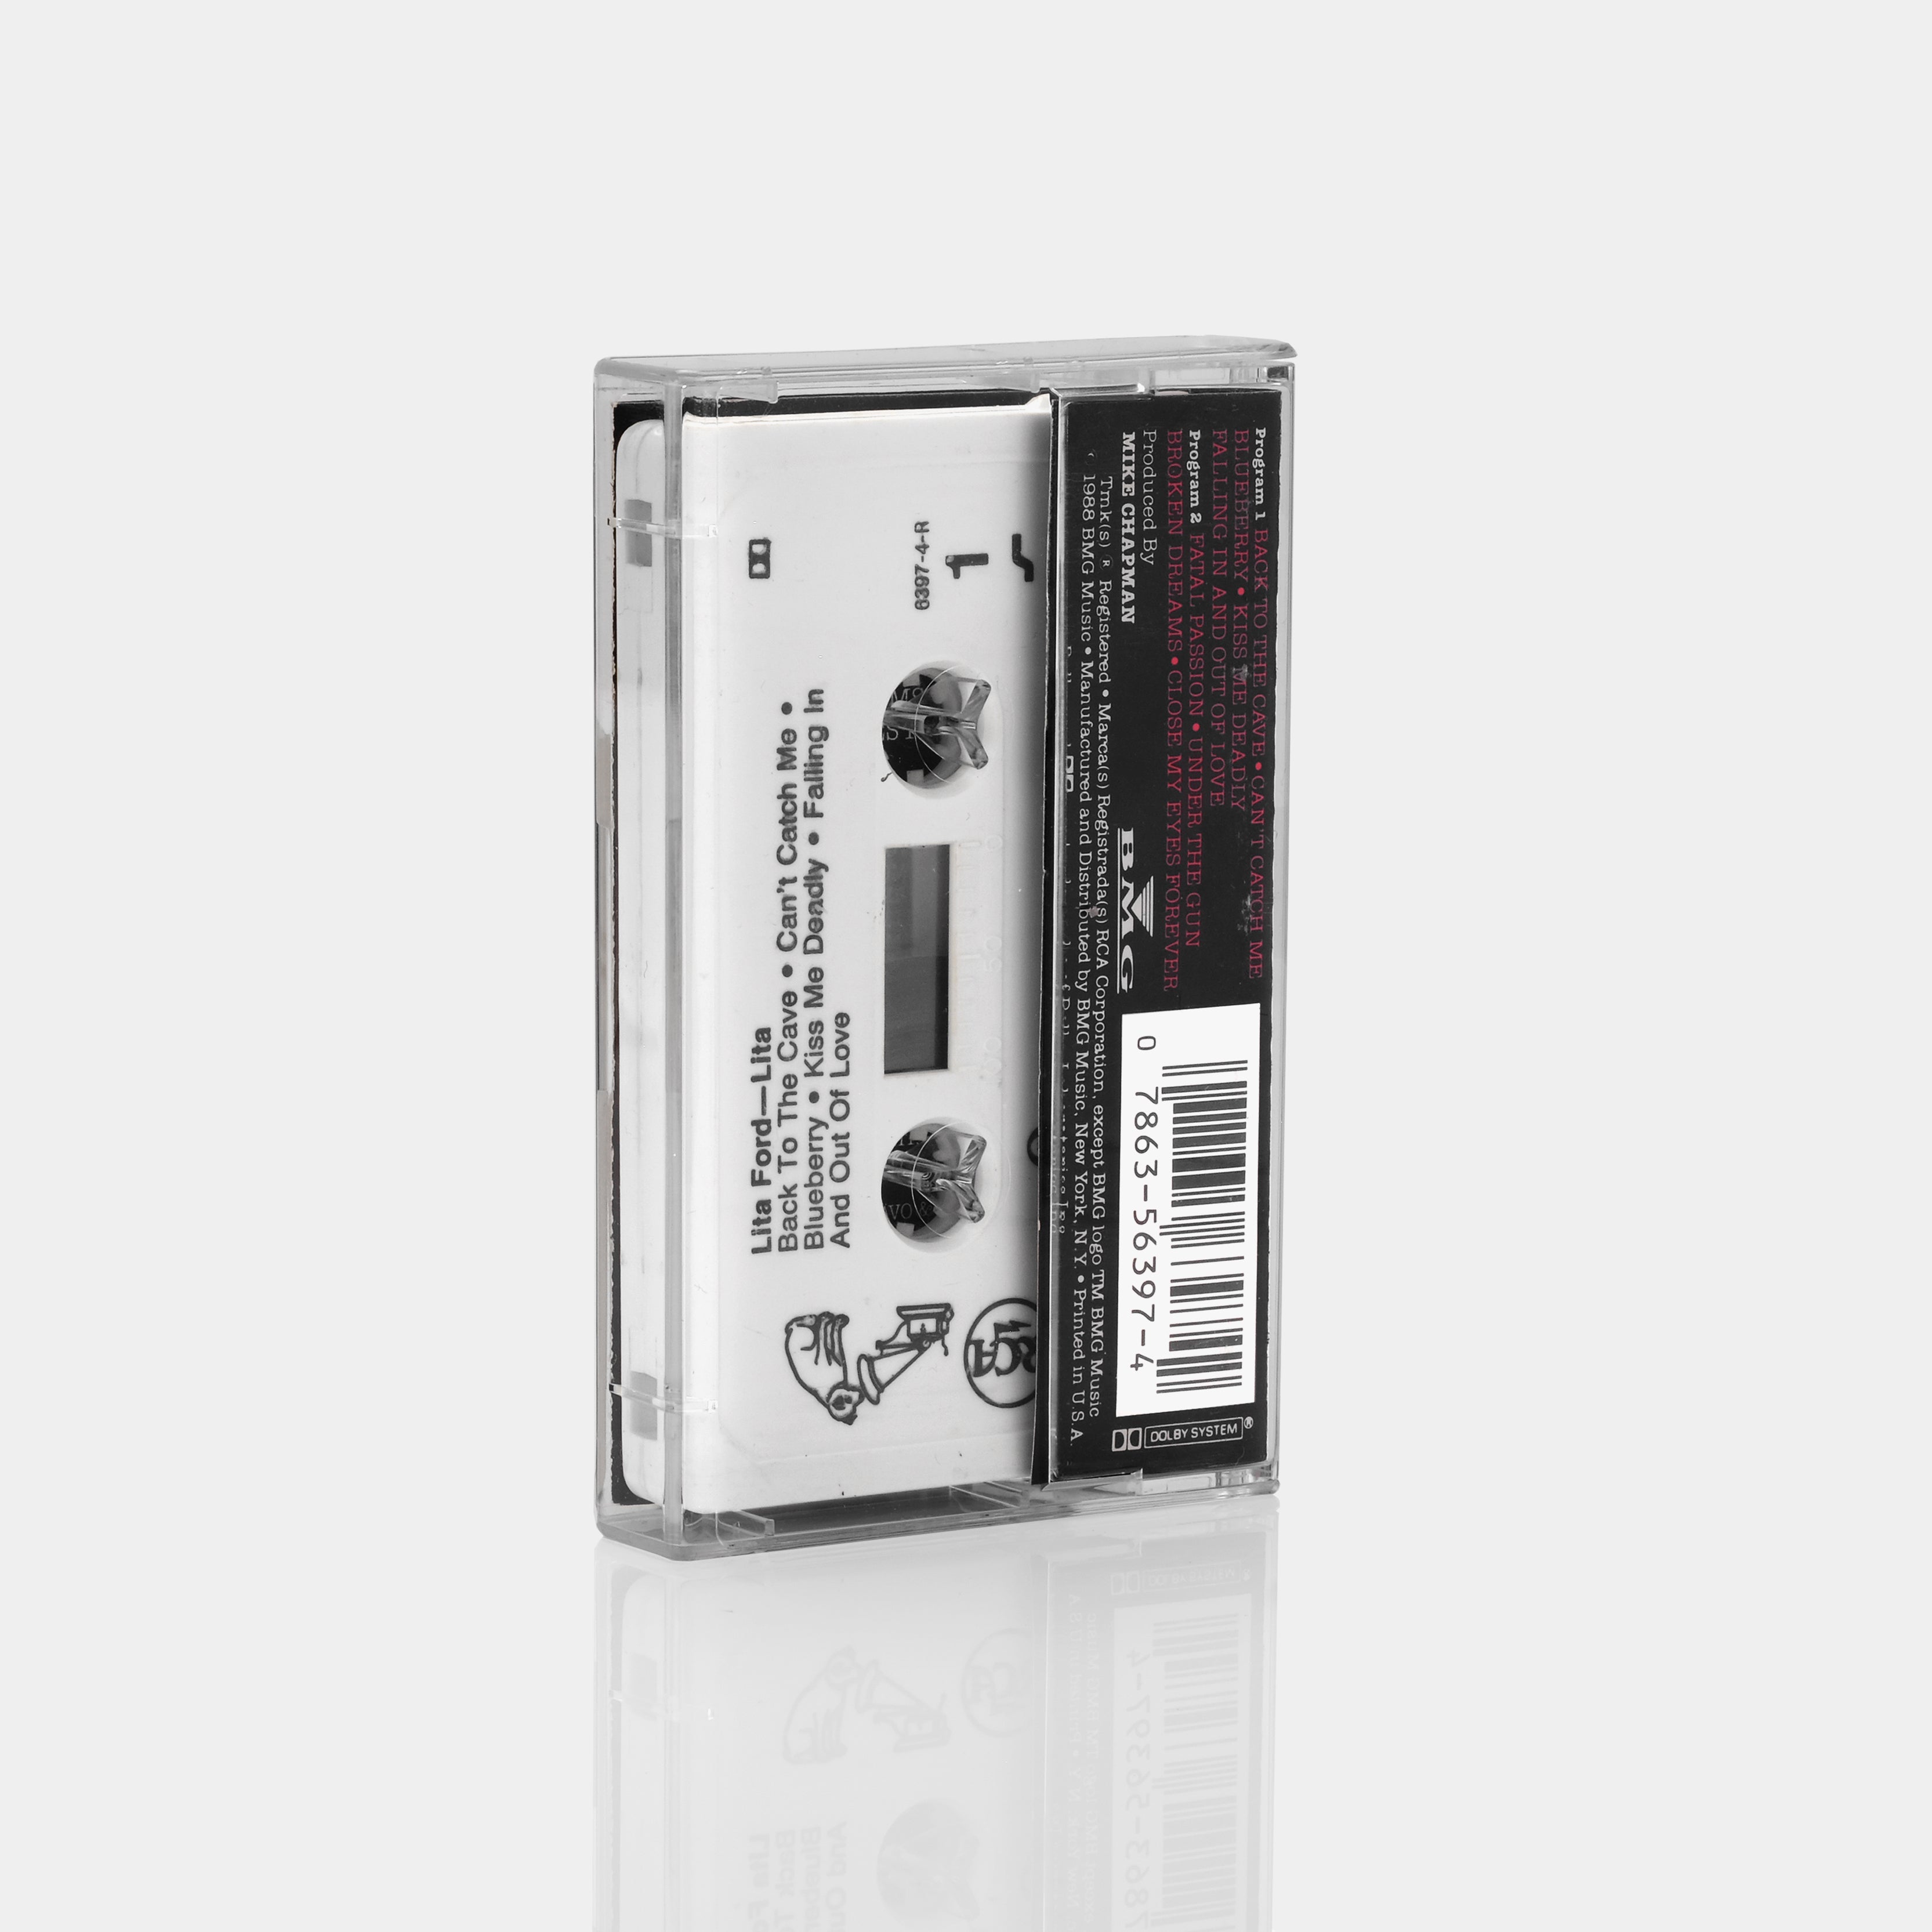 Lita Ford - Lita Cassette Tape